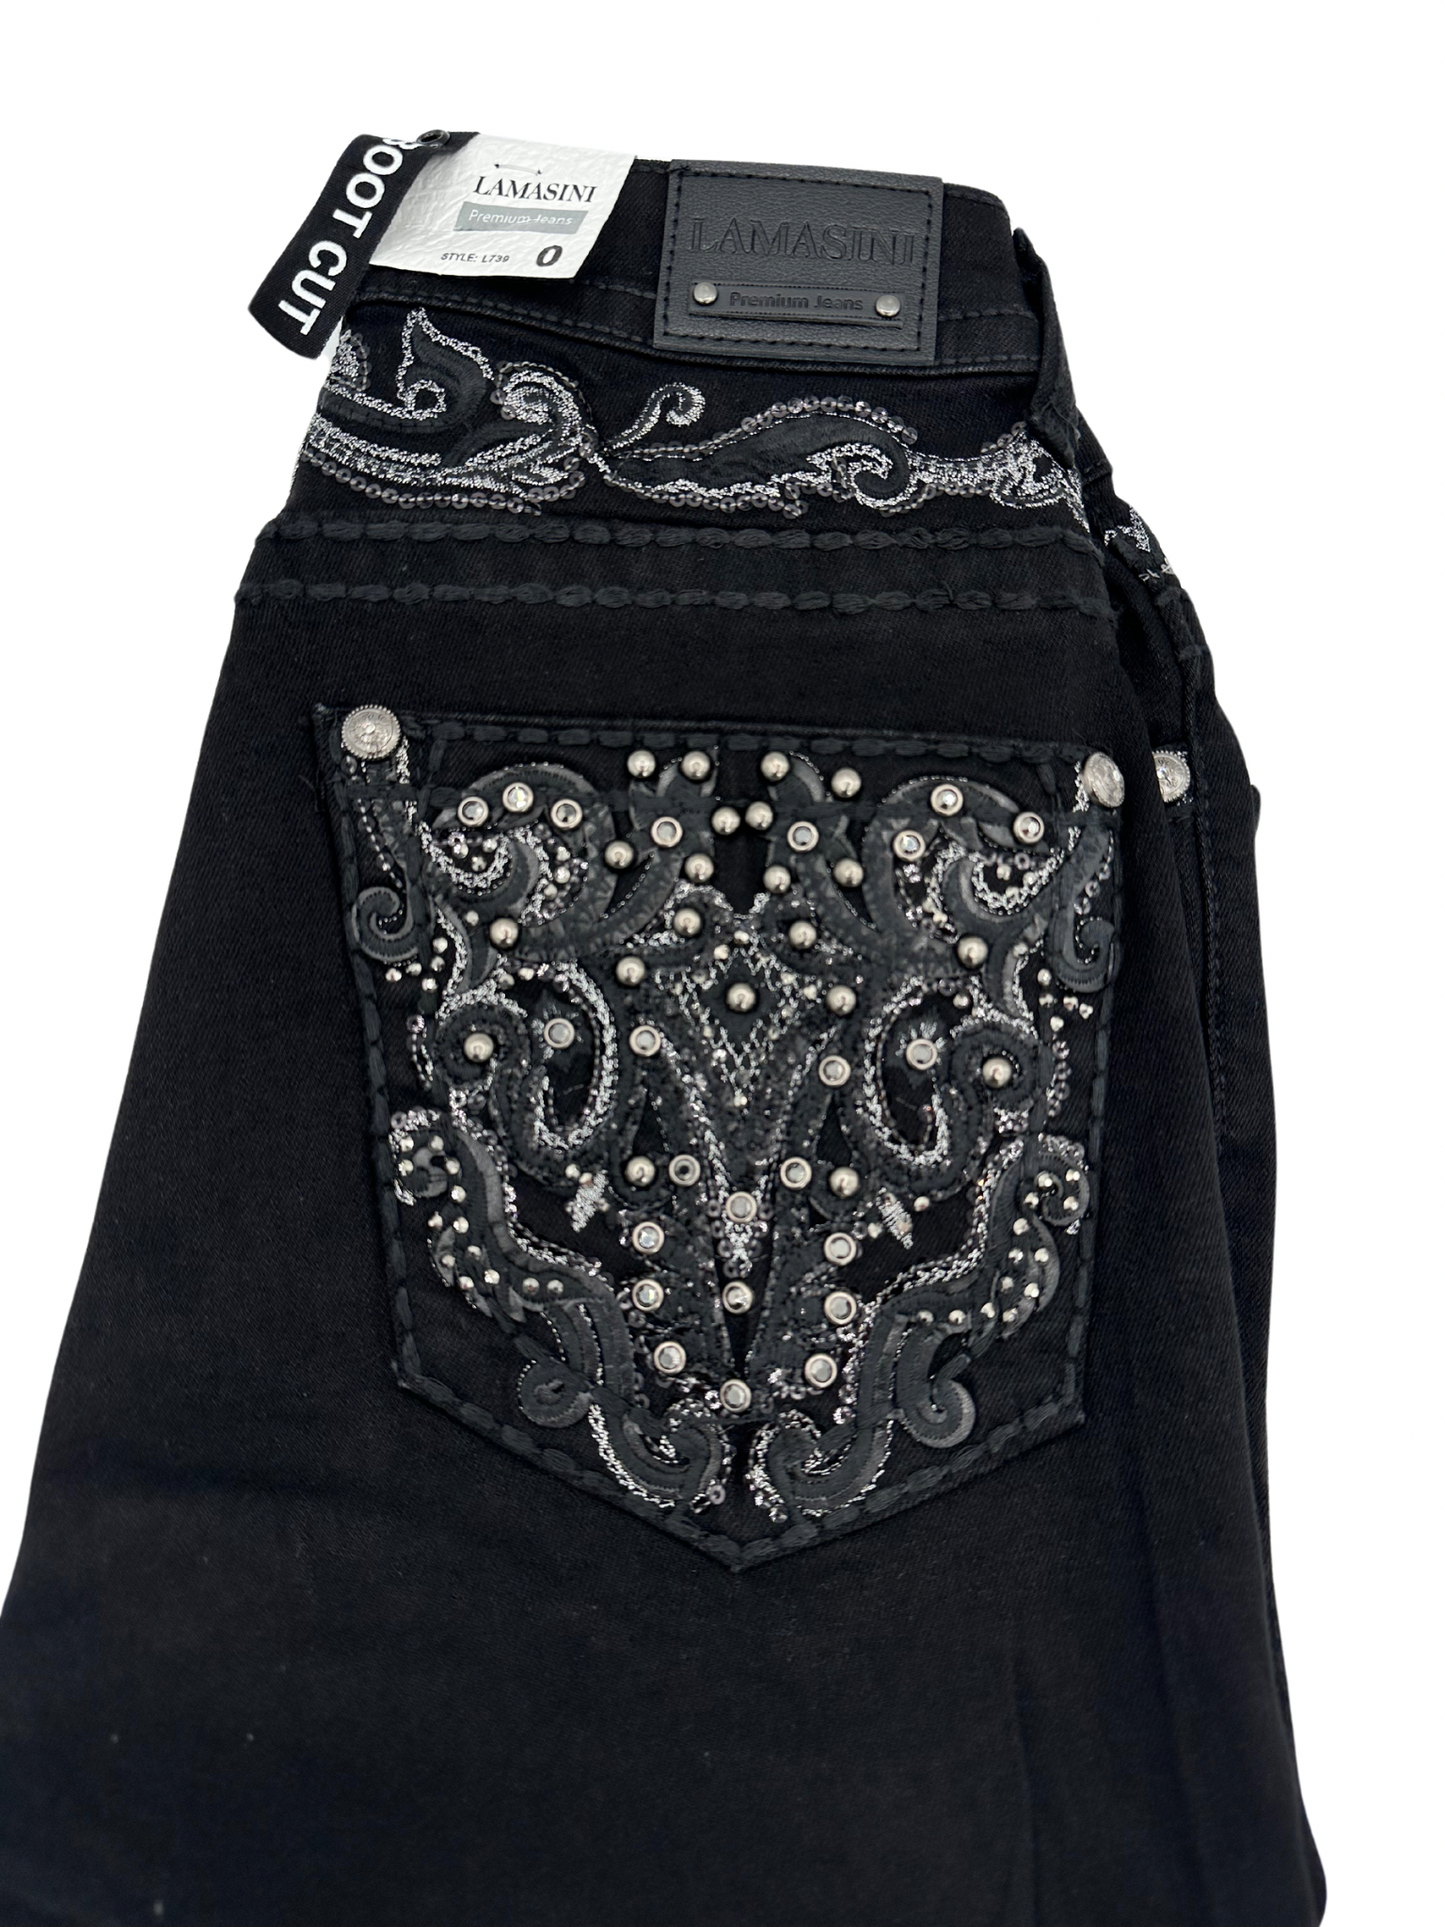 Lamasini Black Bling Studded Pocket Design Bootcut Jean